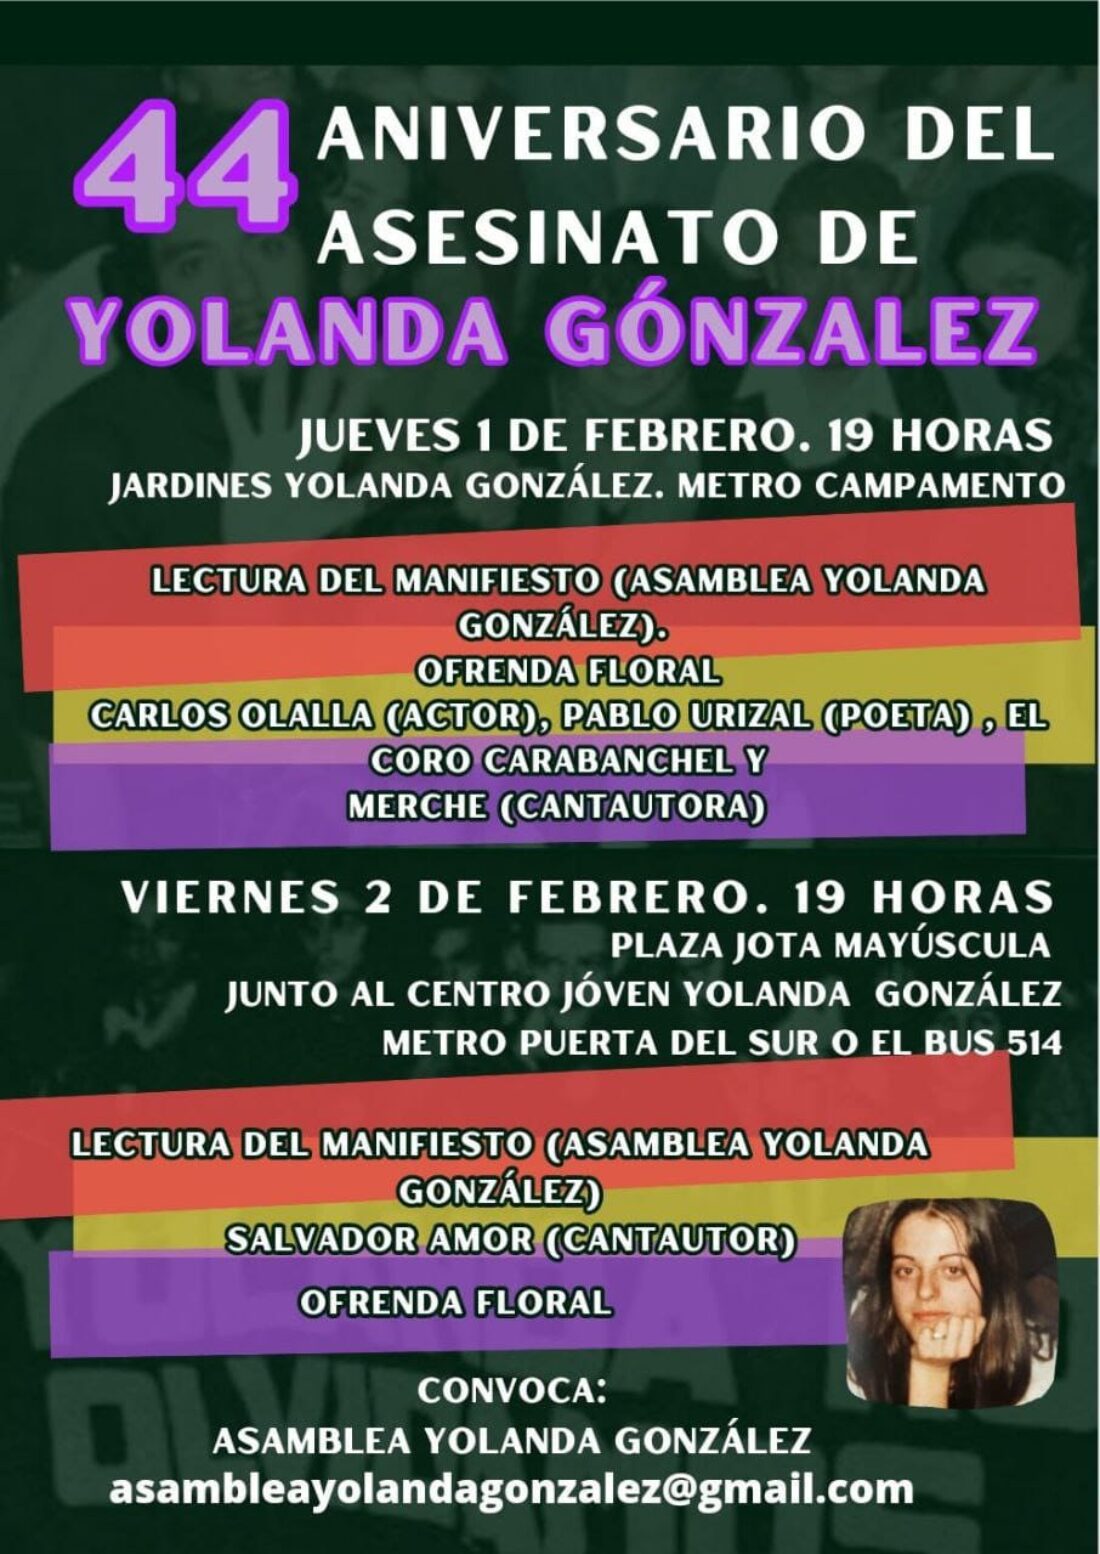 44 Aniversario del asesinato de Yolanda González